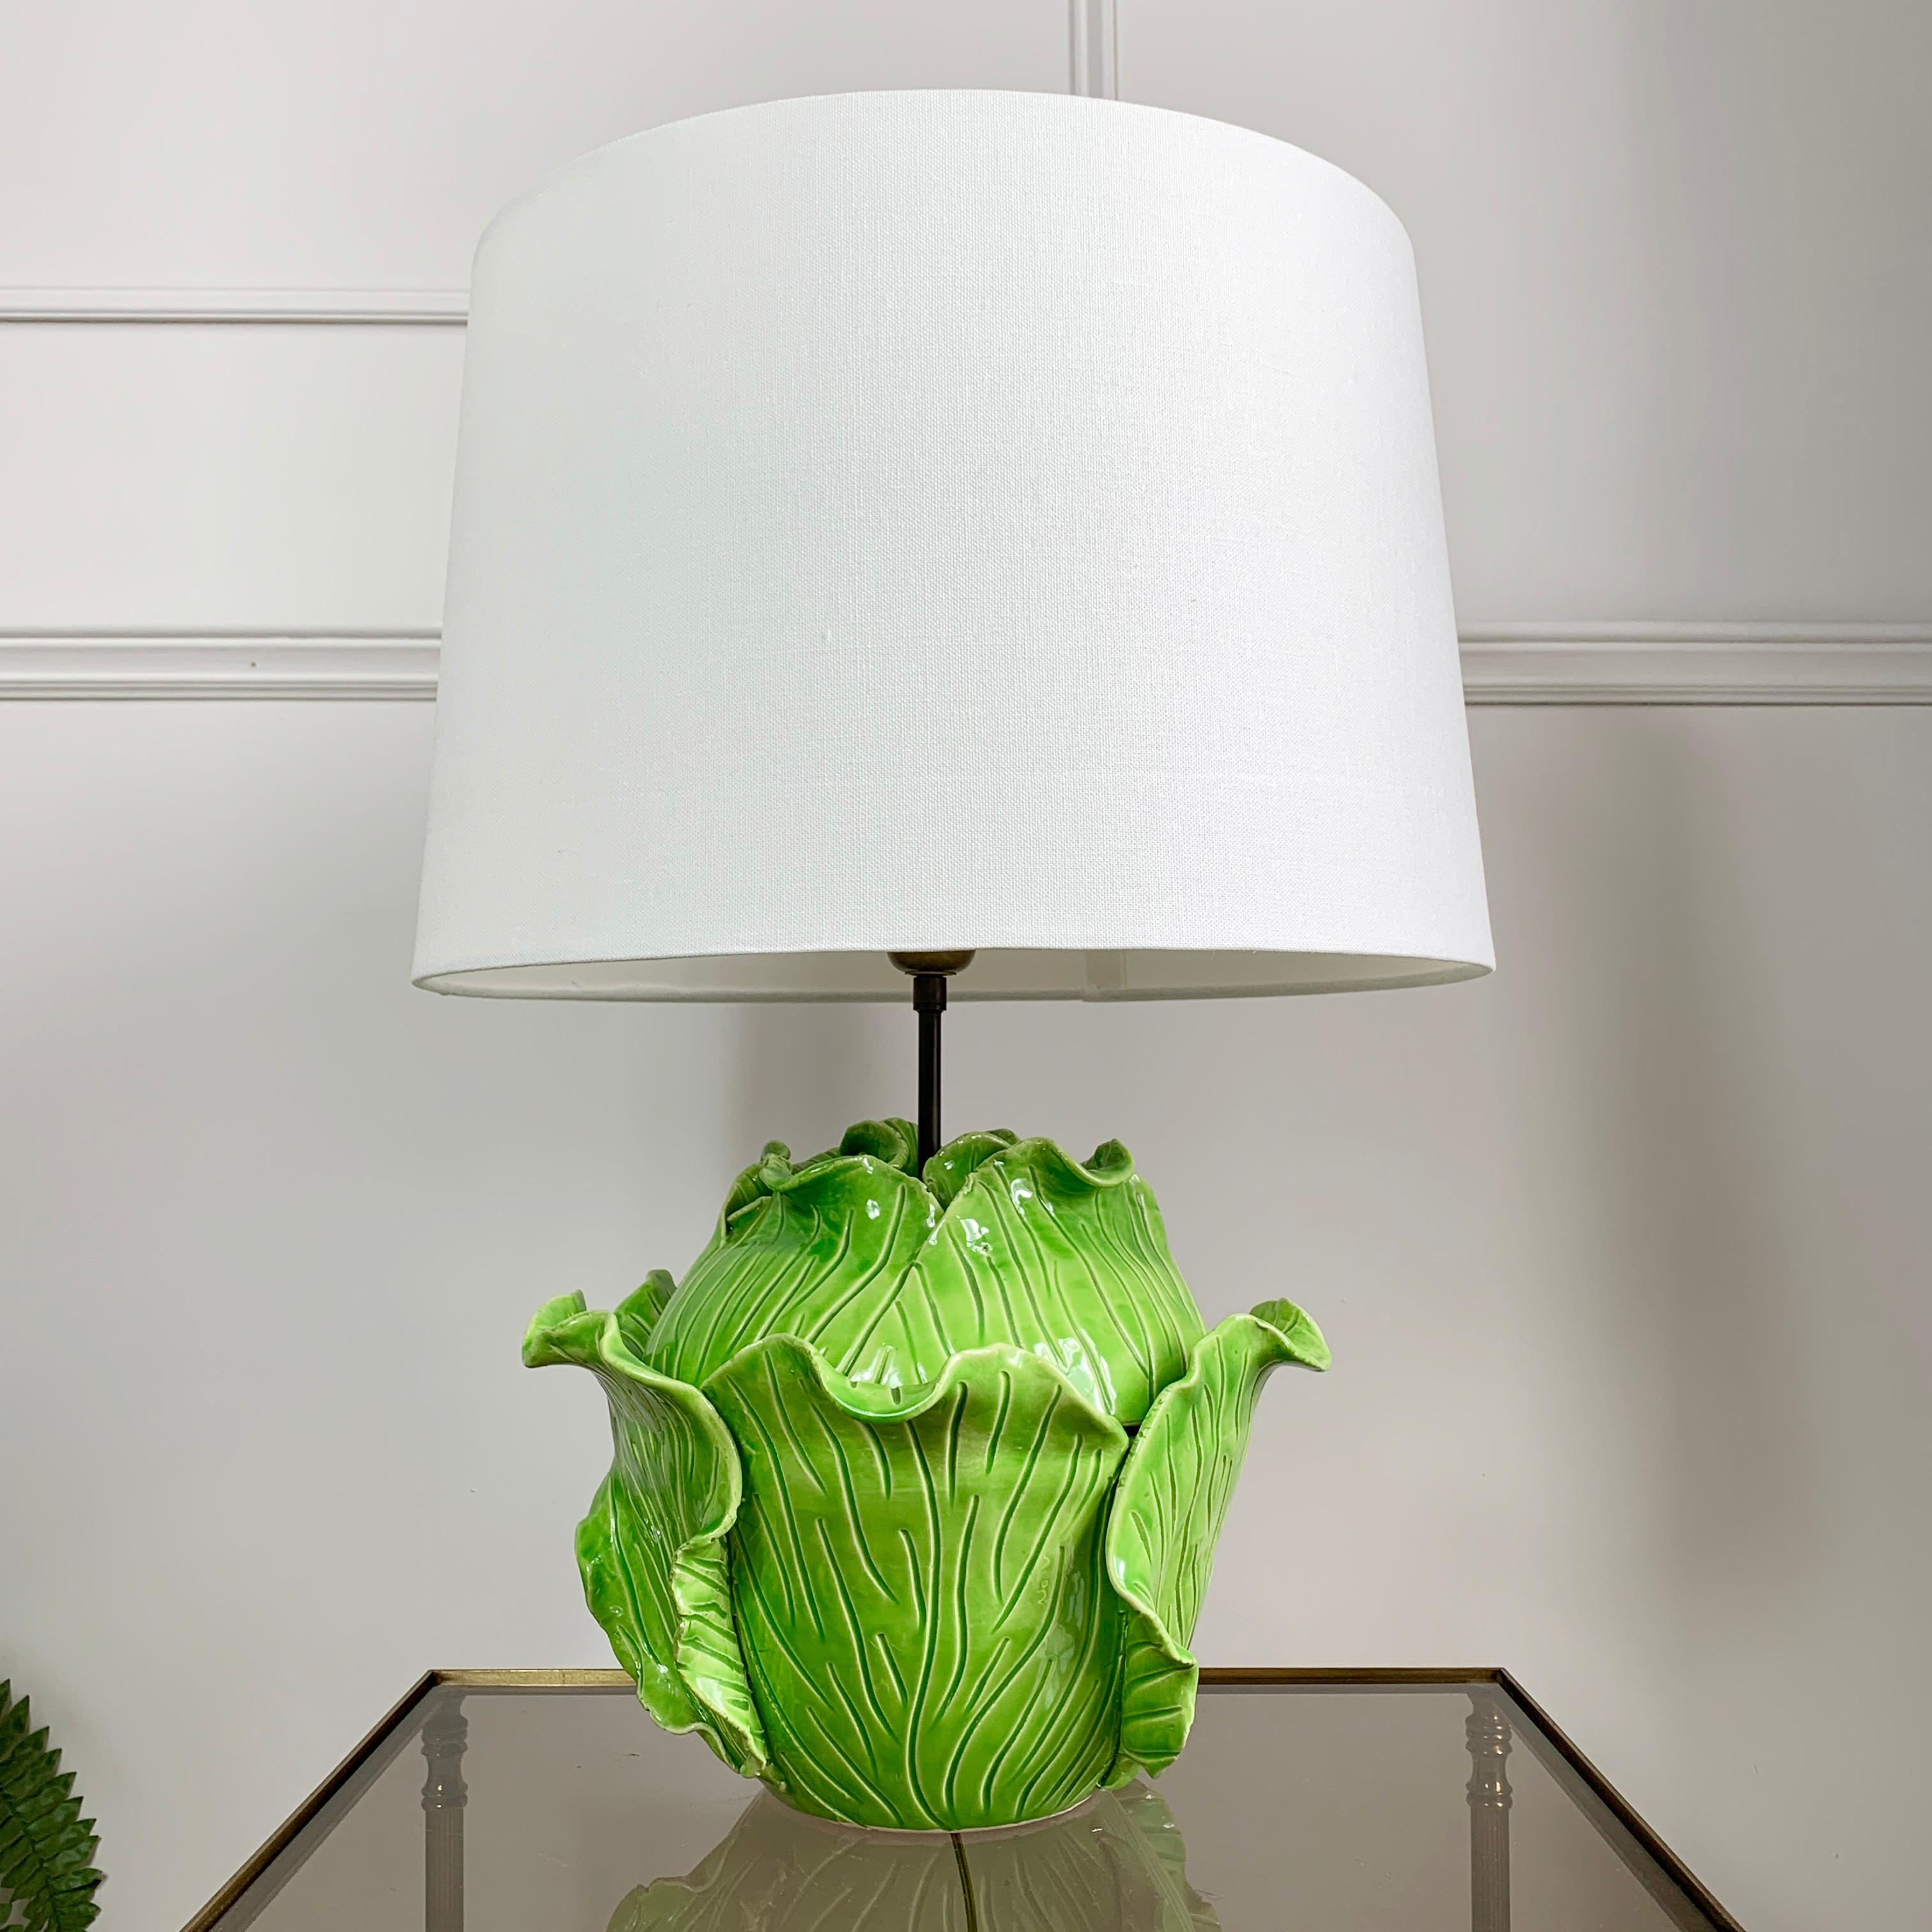 cabbage lamp base